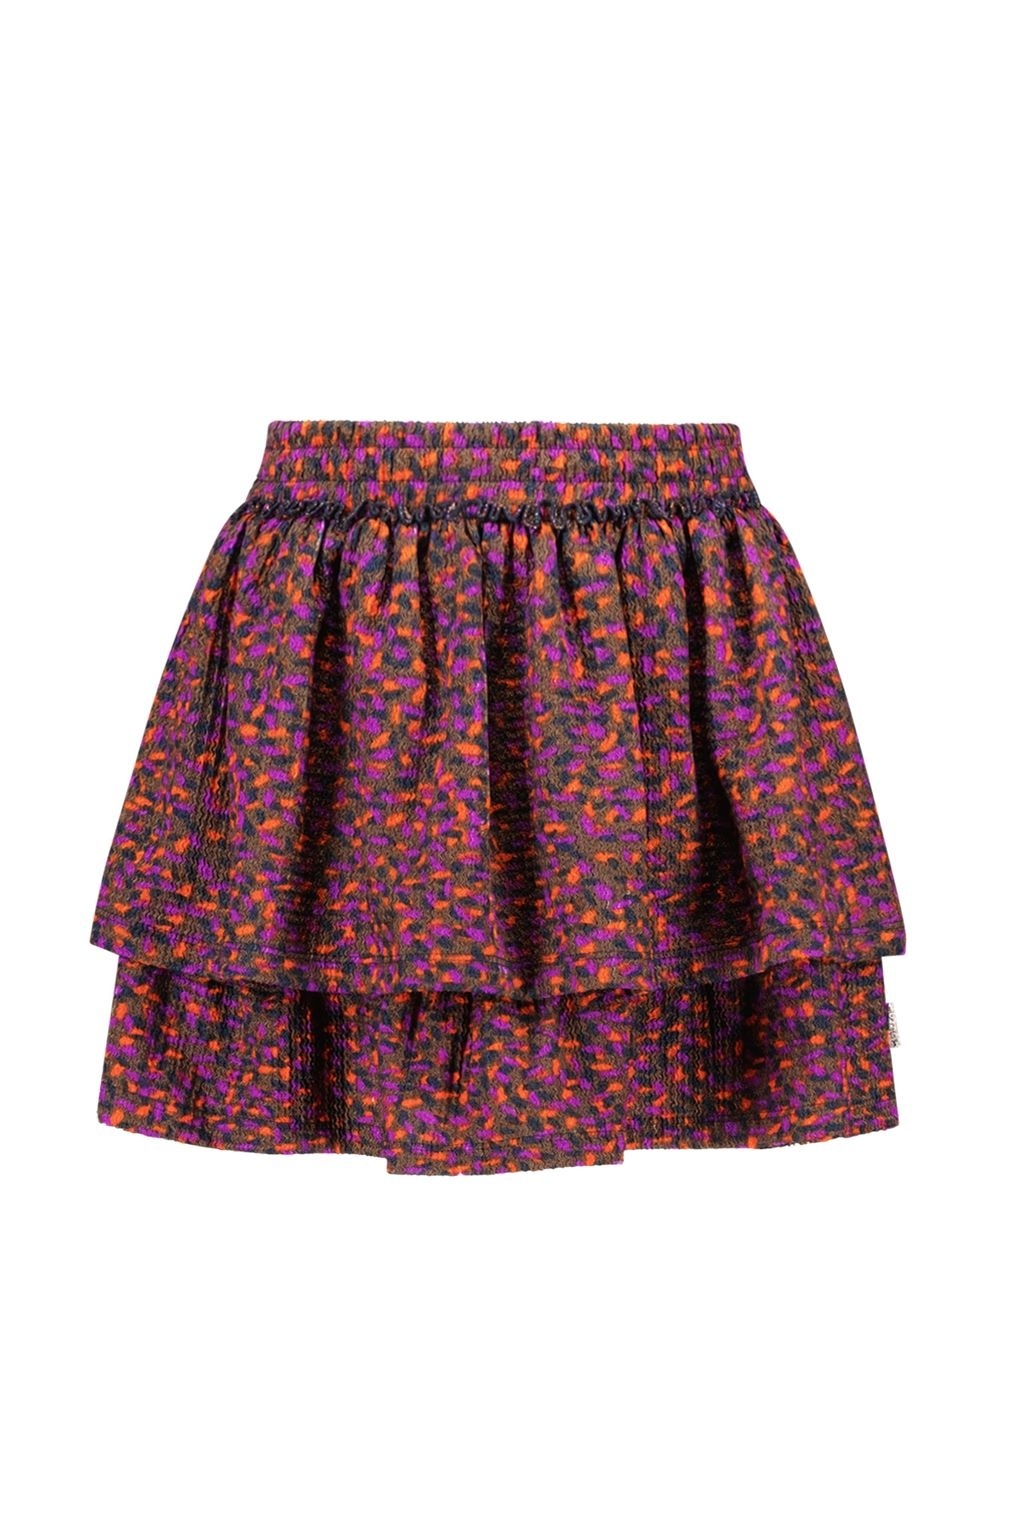 B.Nosy Girls Kids Skirts Y308-5720 maat 110